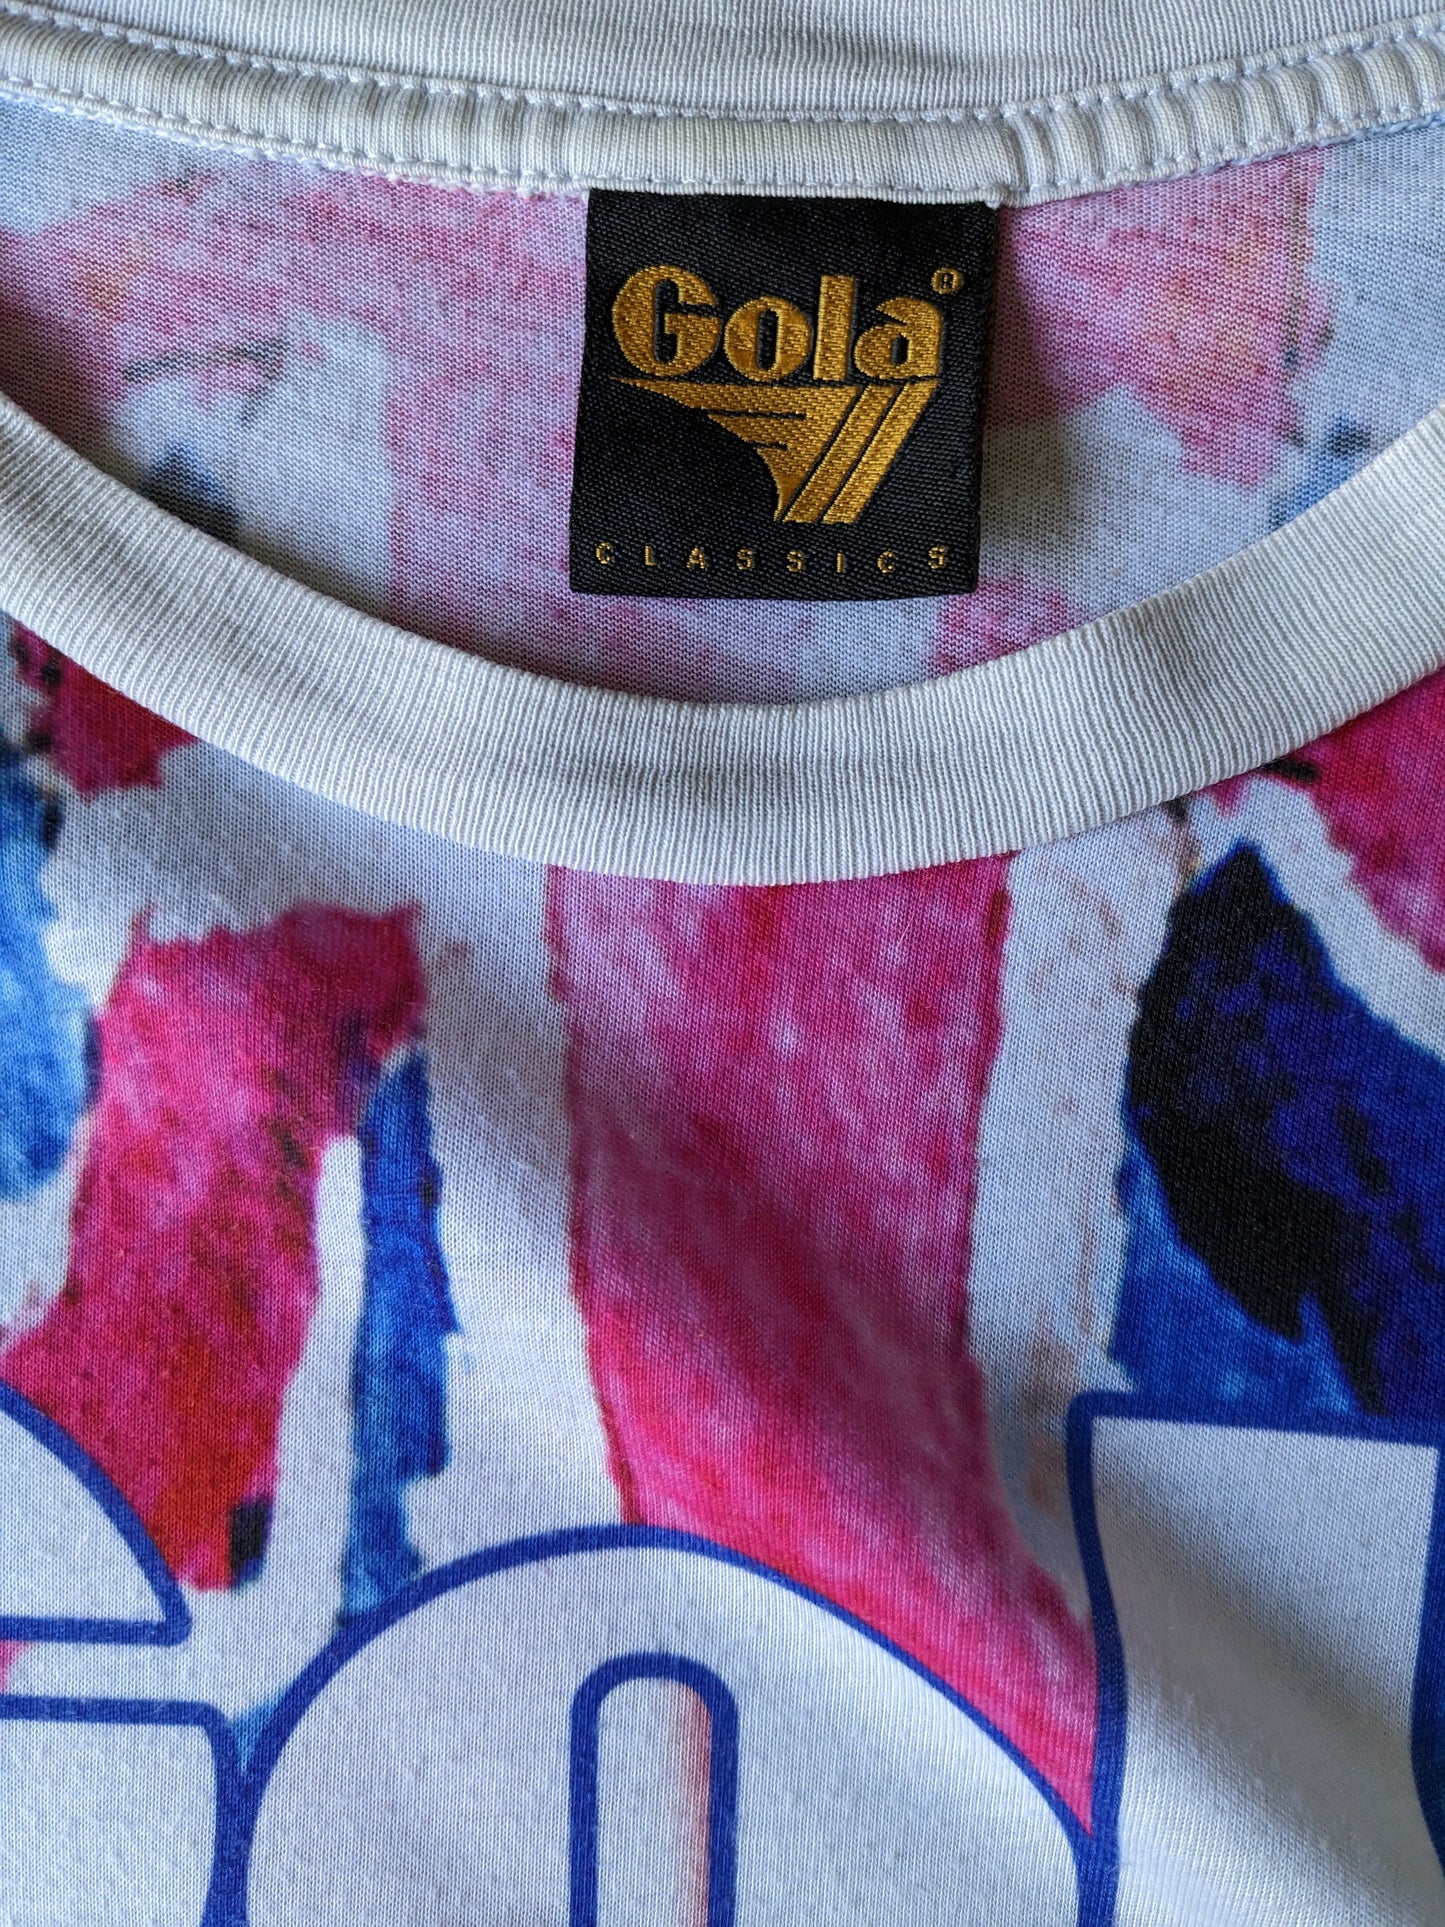 Gola Classics shirt. Blauw Wit Roze print. Maat M.